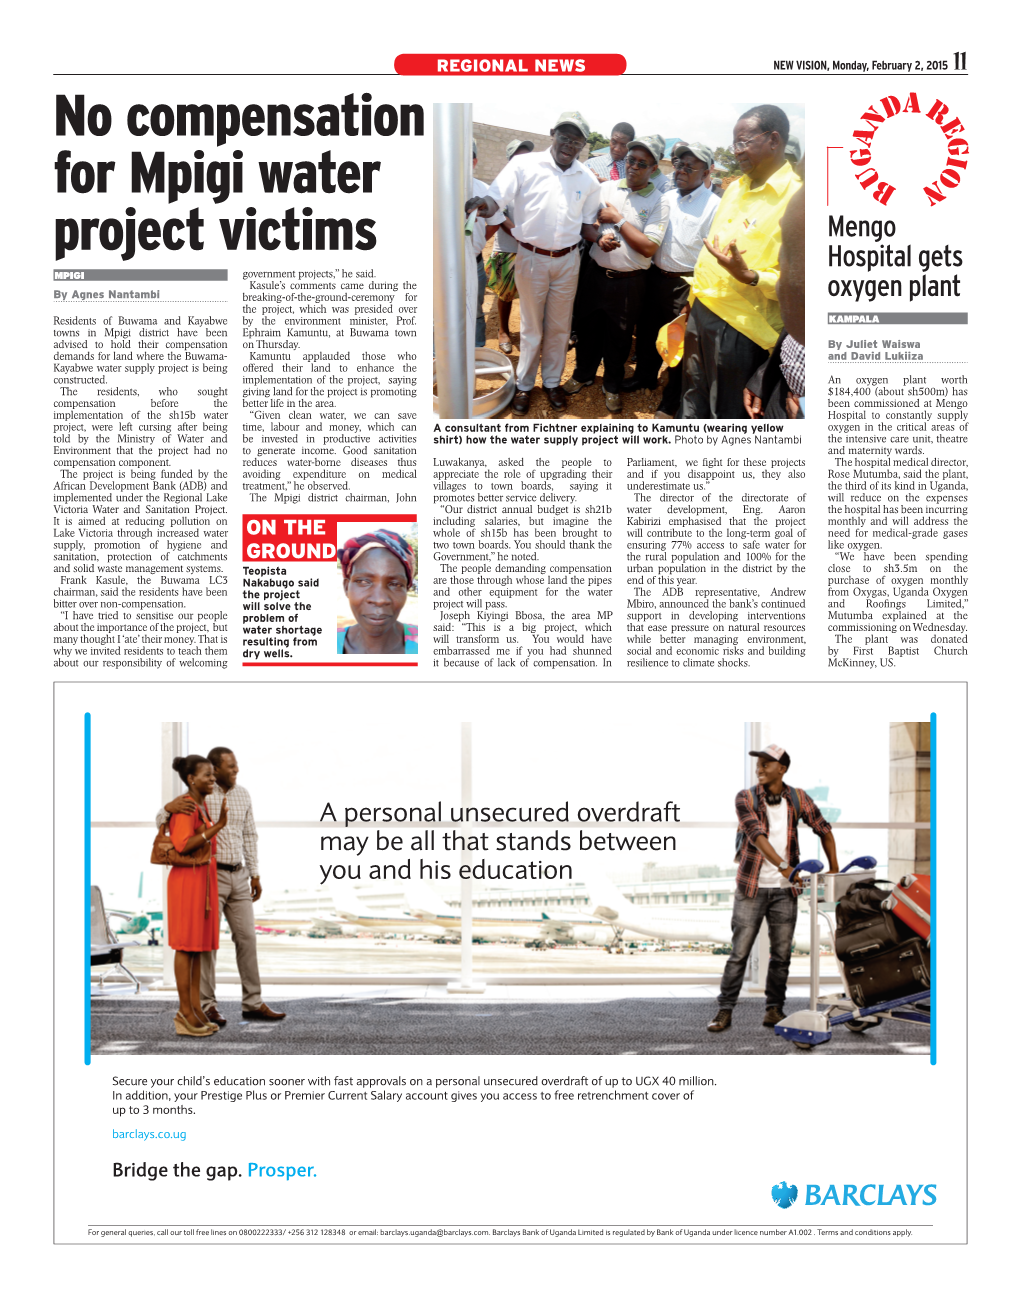 No Compensation for Mpigi Water Project Victims